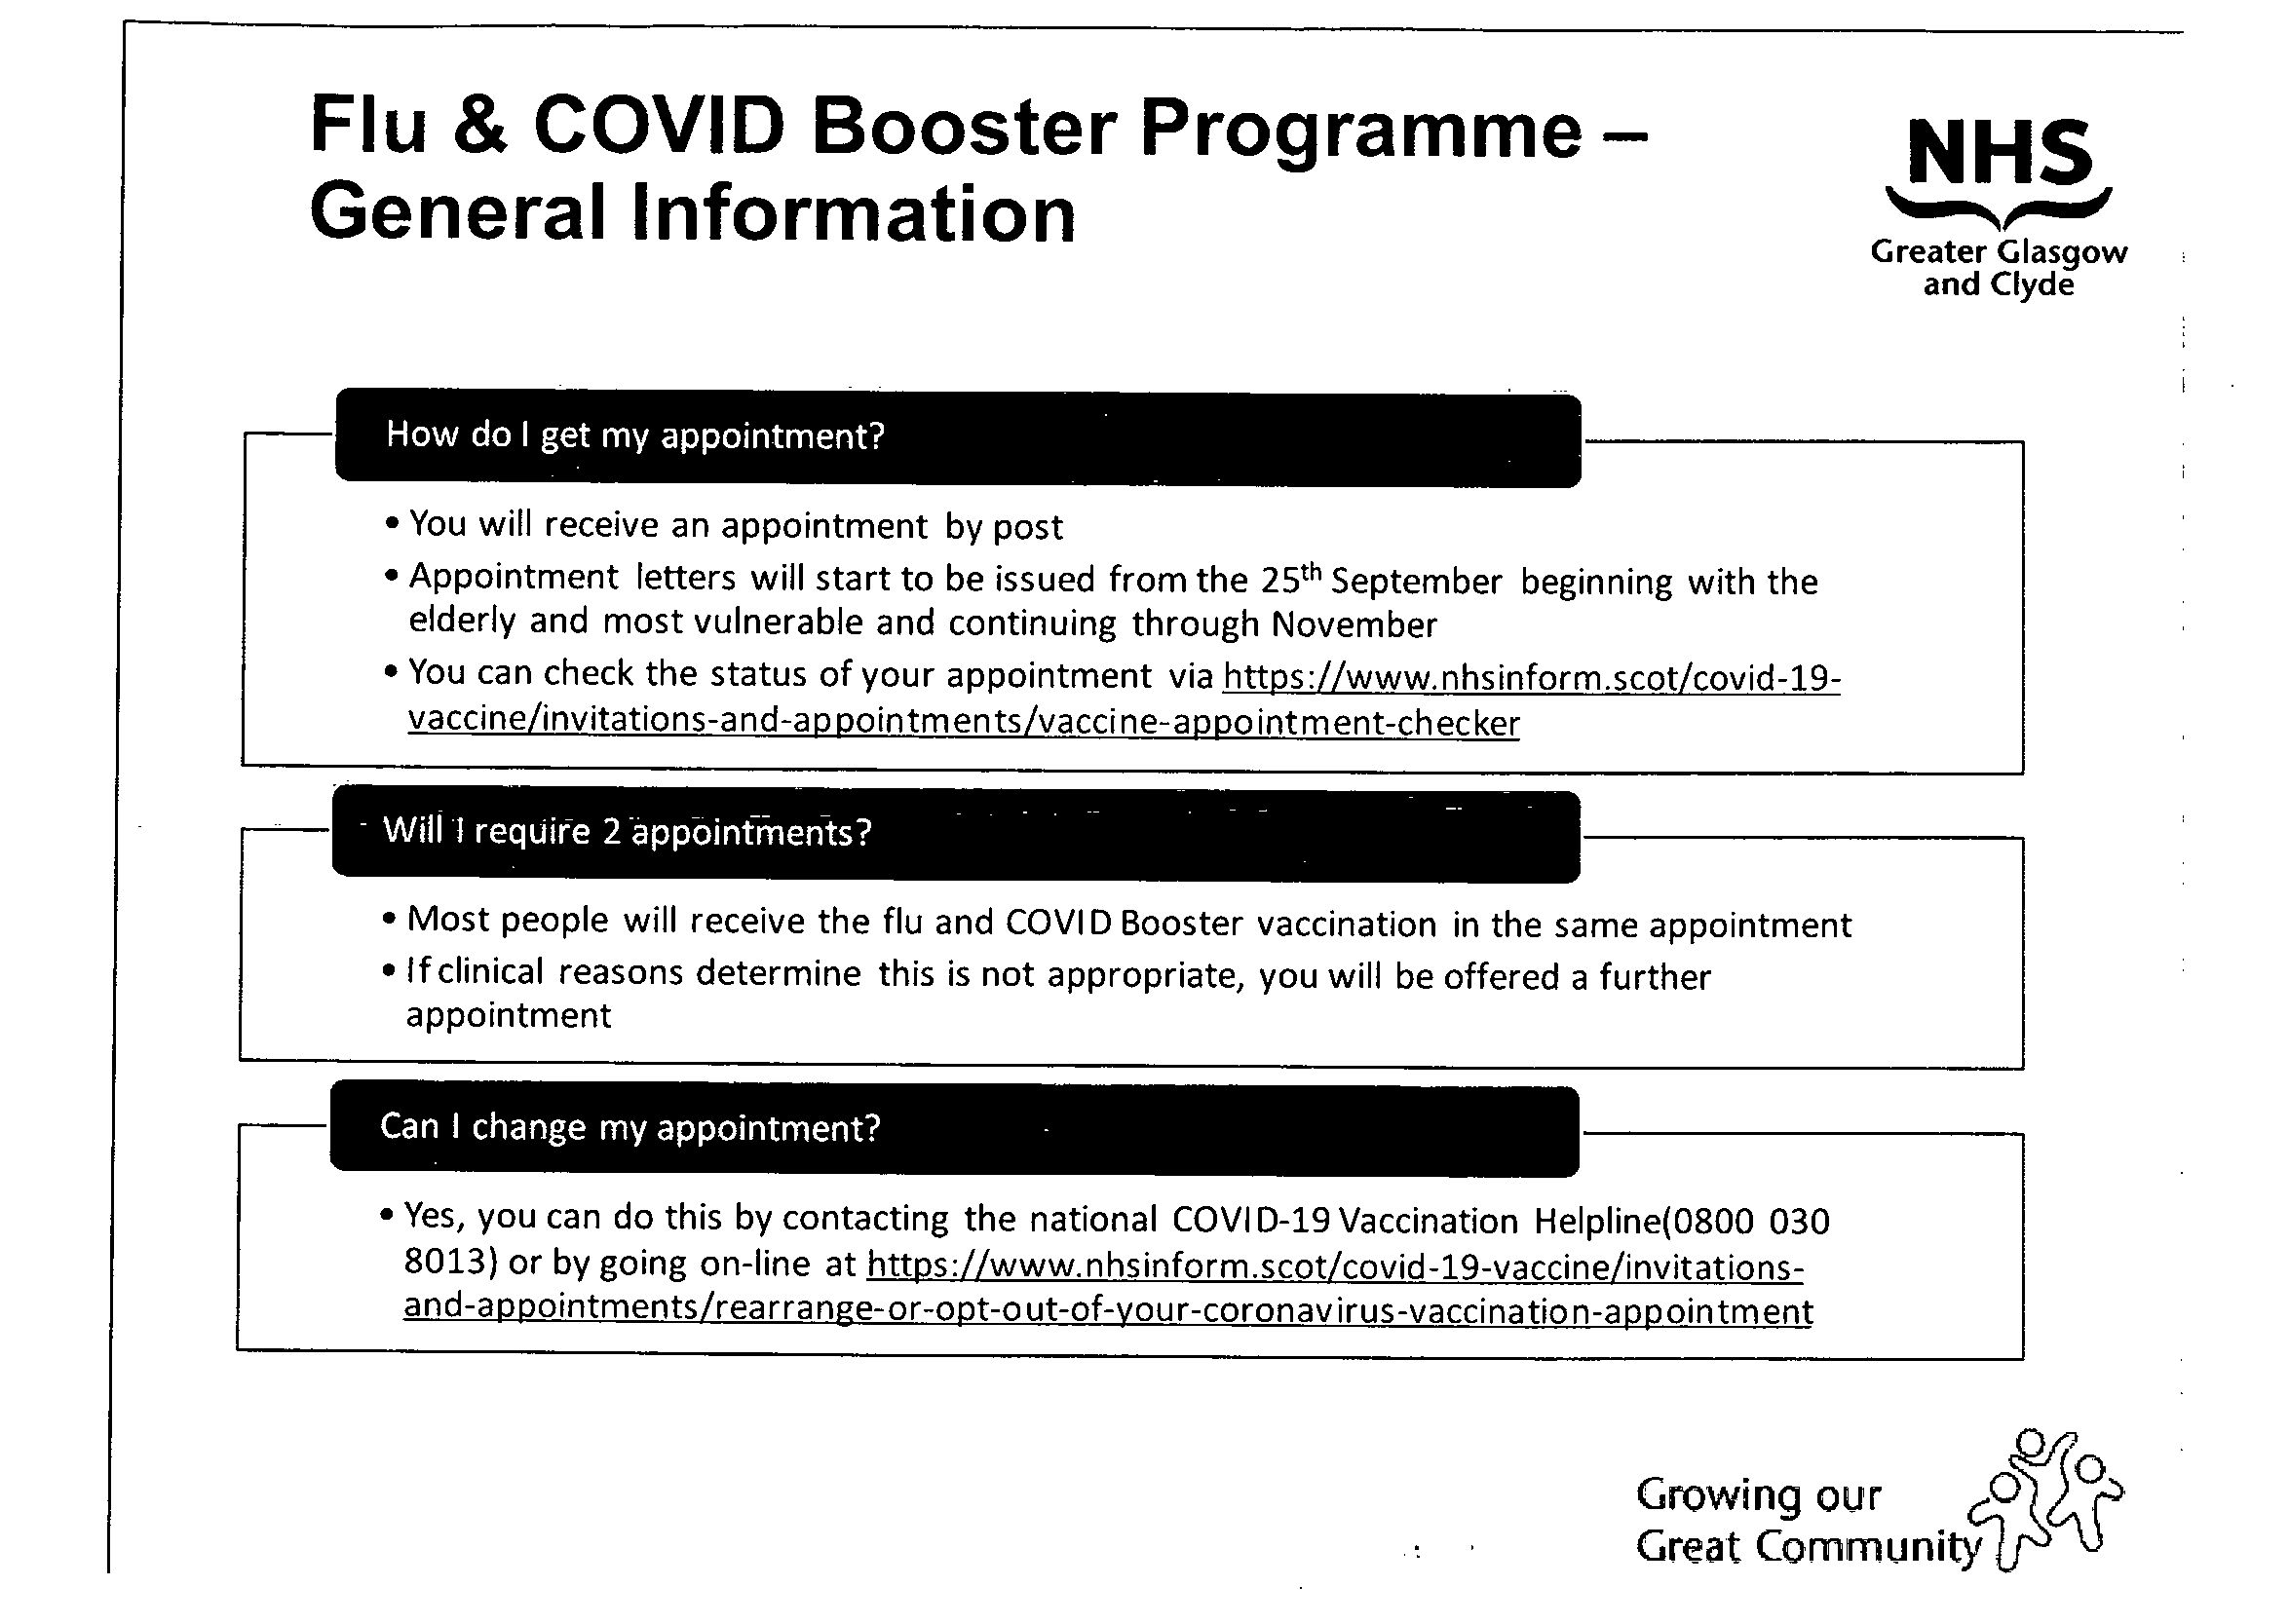 Flu & Covid Booster Information-2